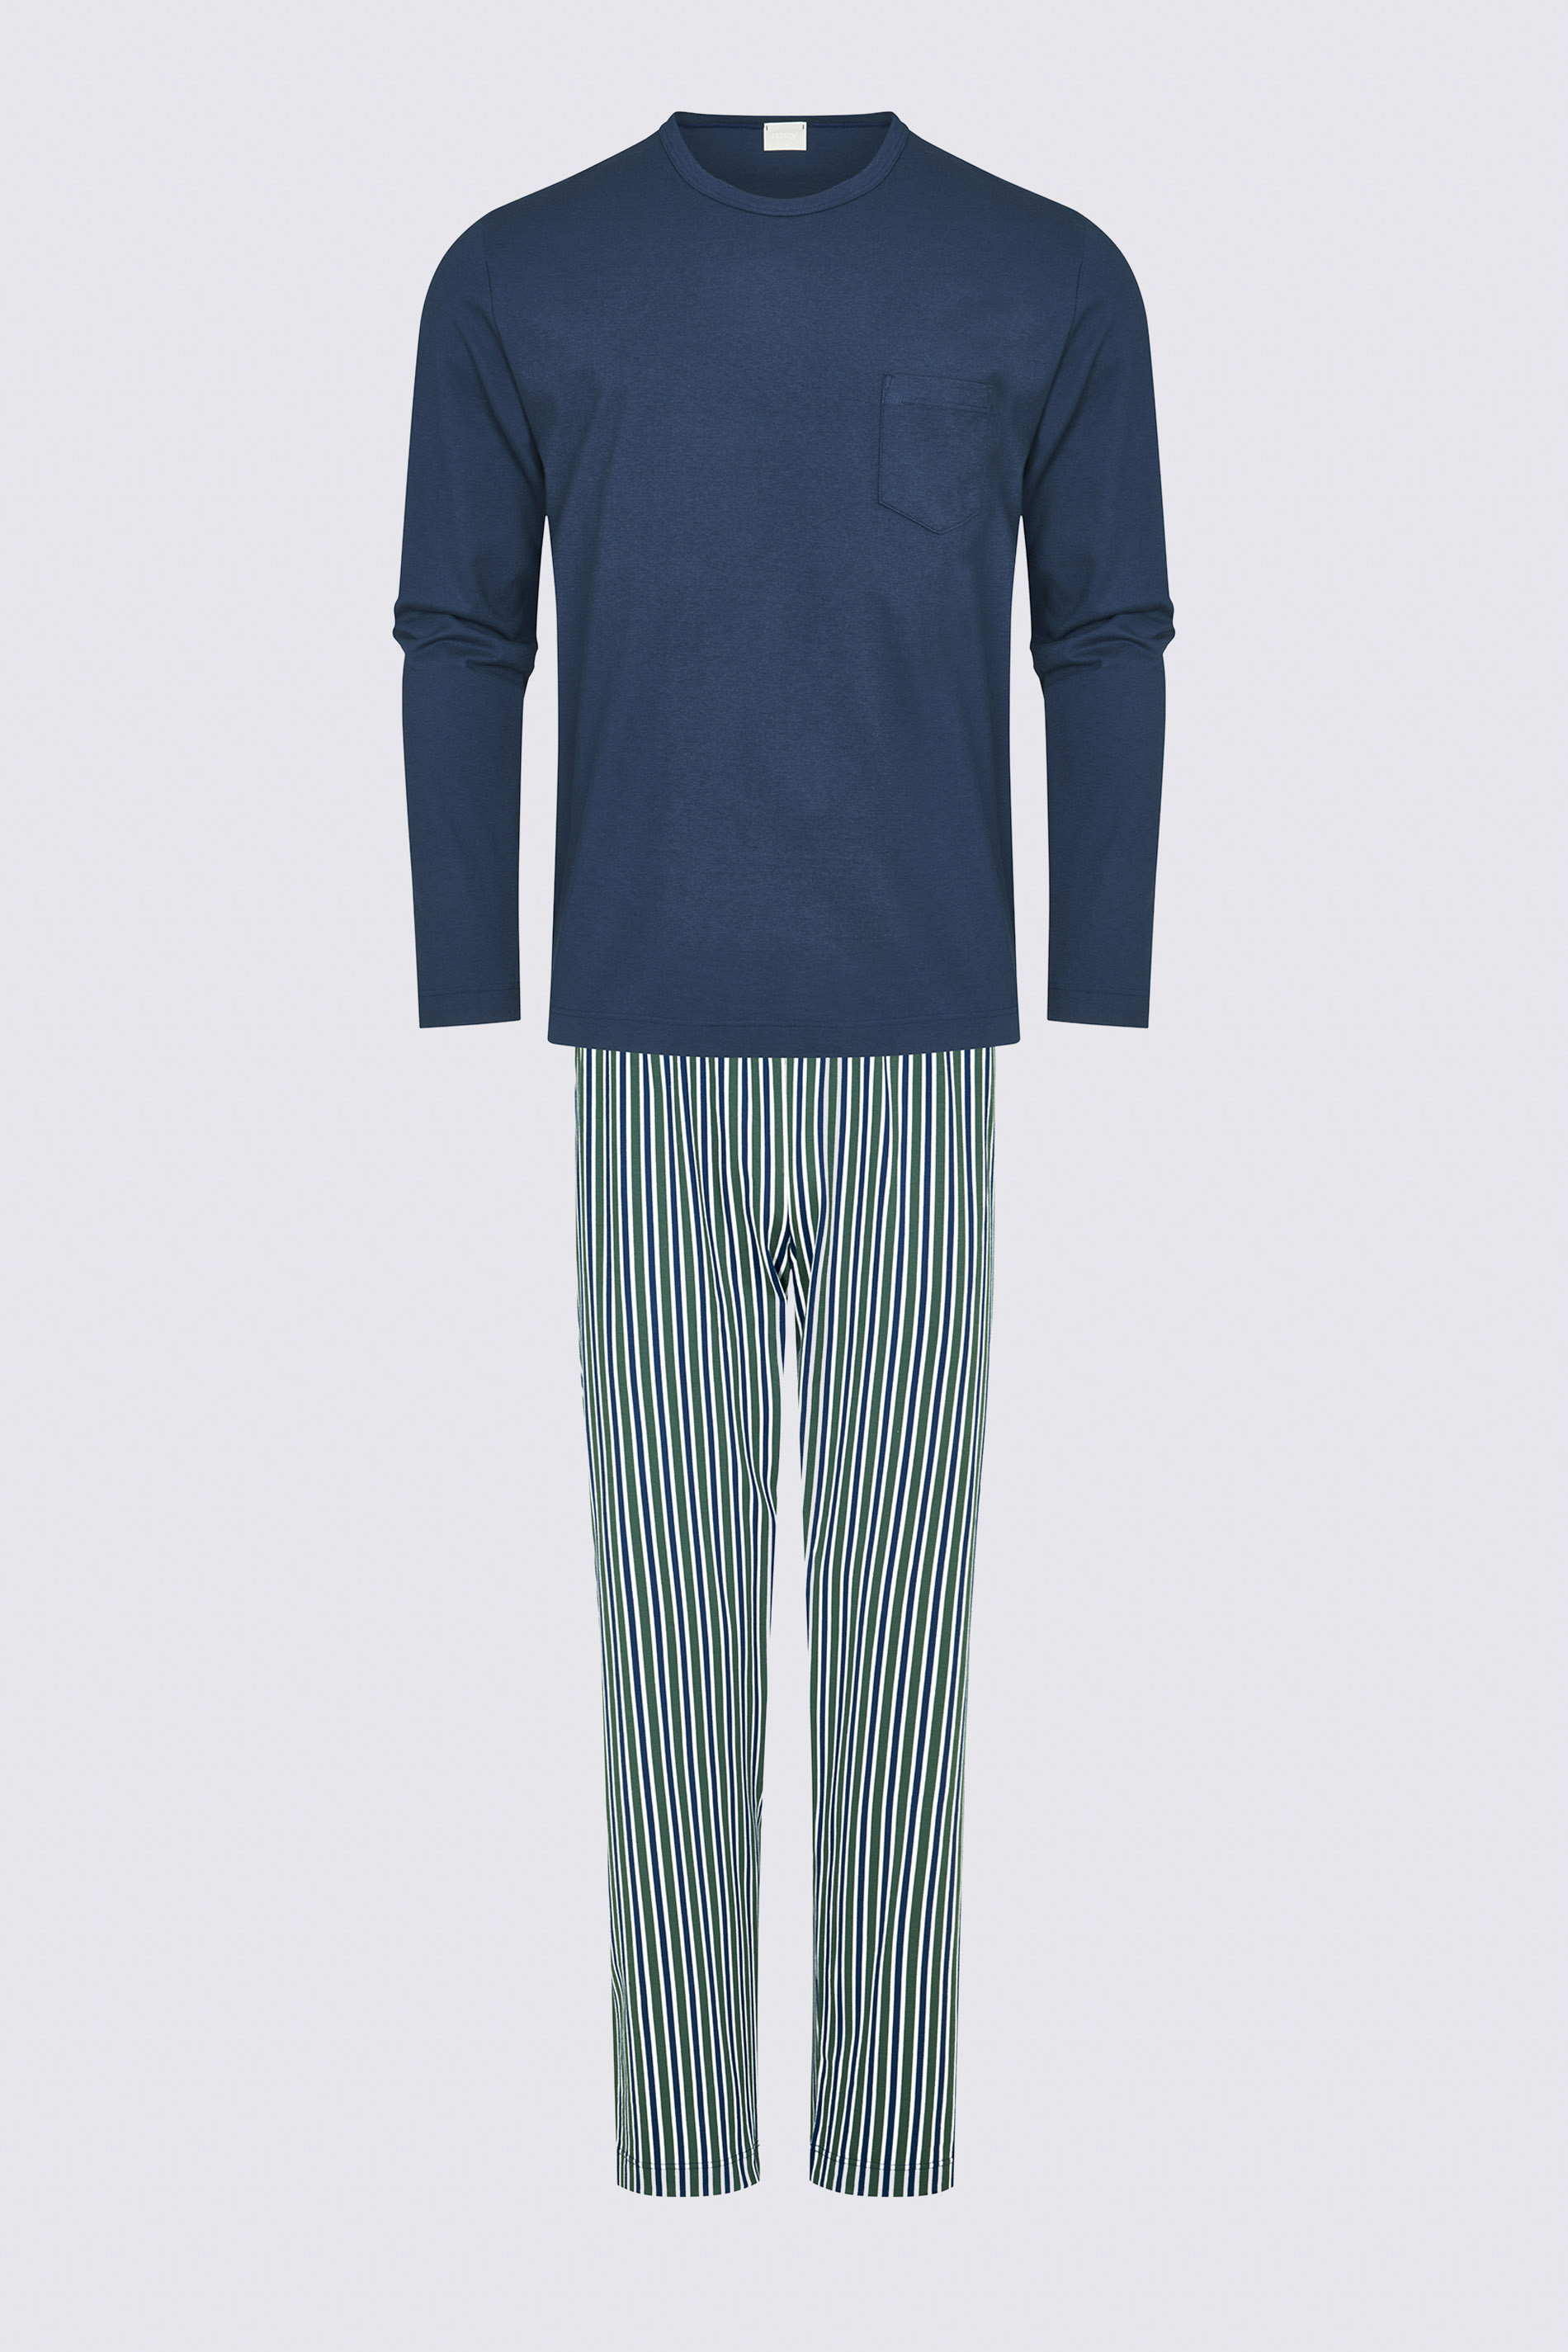 Pyjama Neptune Serie 3 Col Stripes Uitknippen | mey®